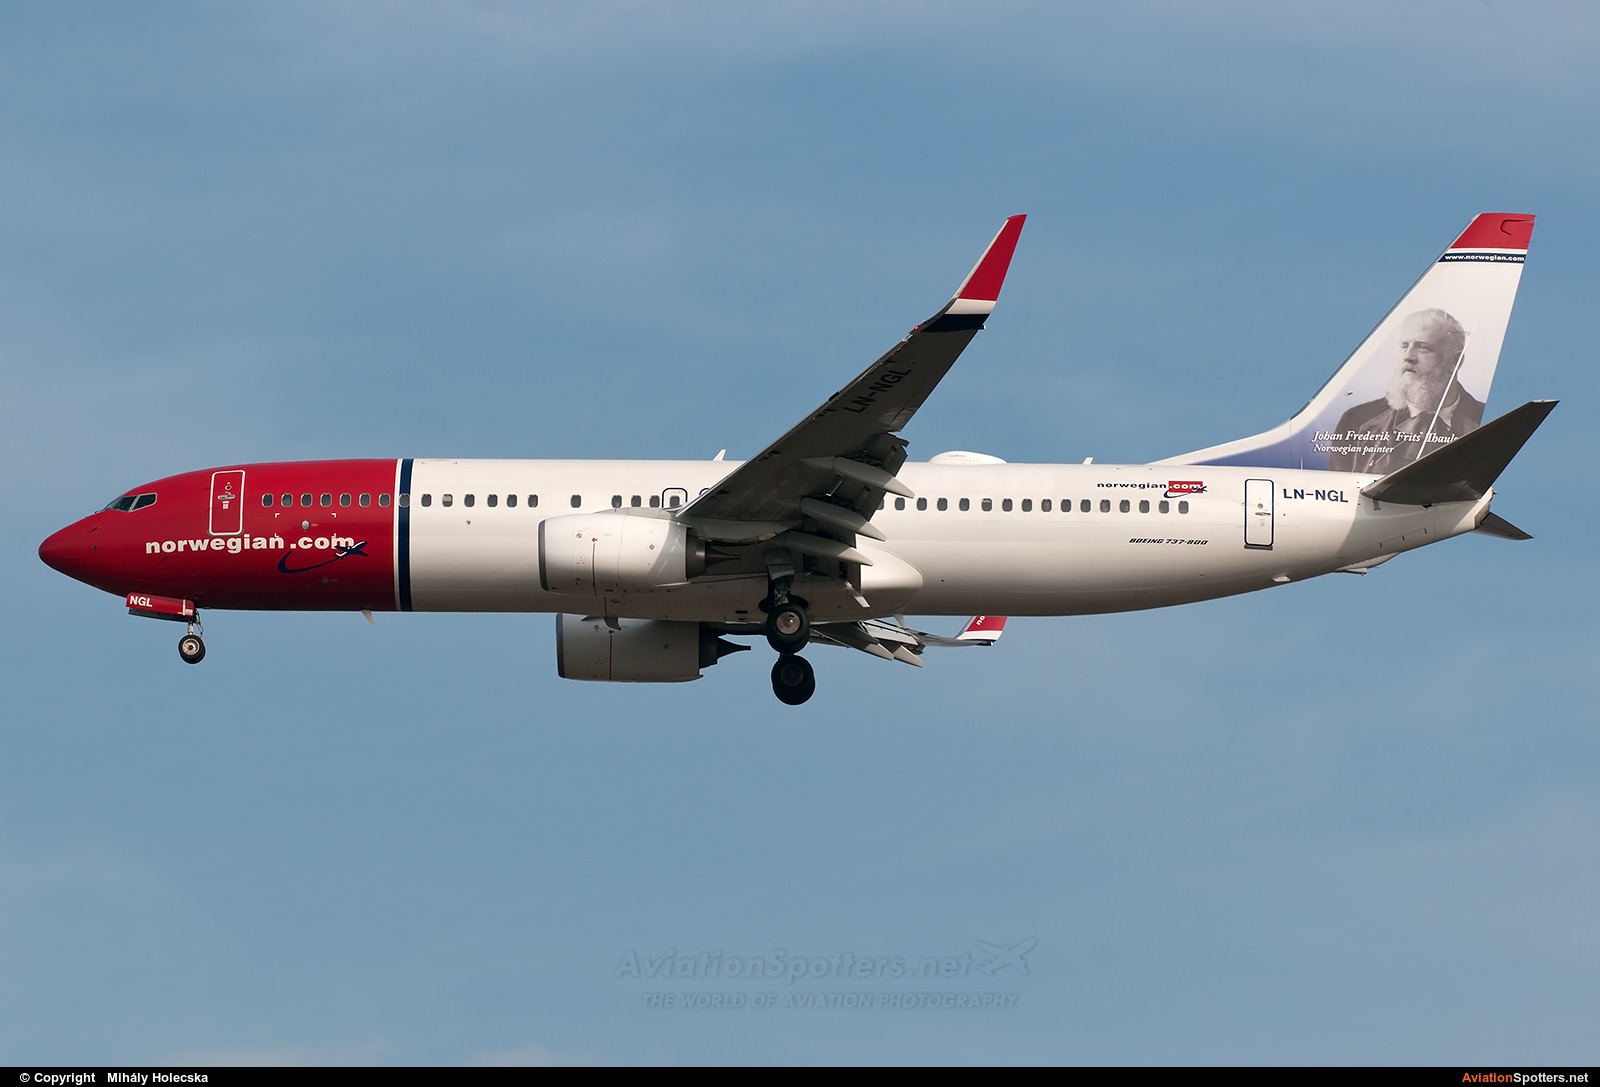 Norwegian Air Shuttle  -  737-800  (LN-NGL) By Mihály Holecska (Misixx)